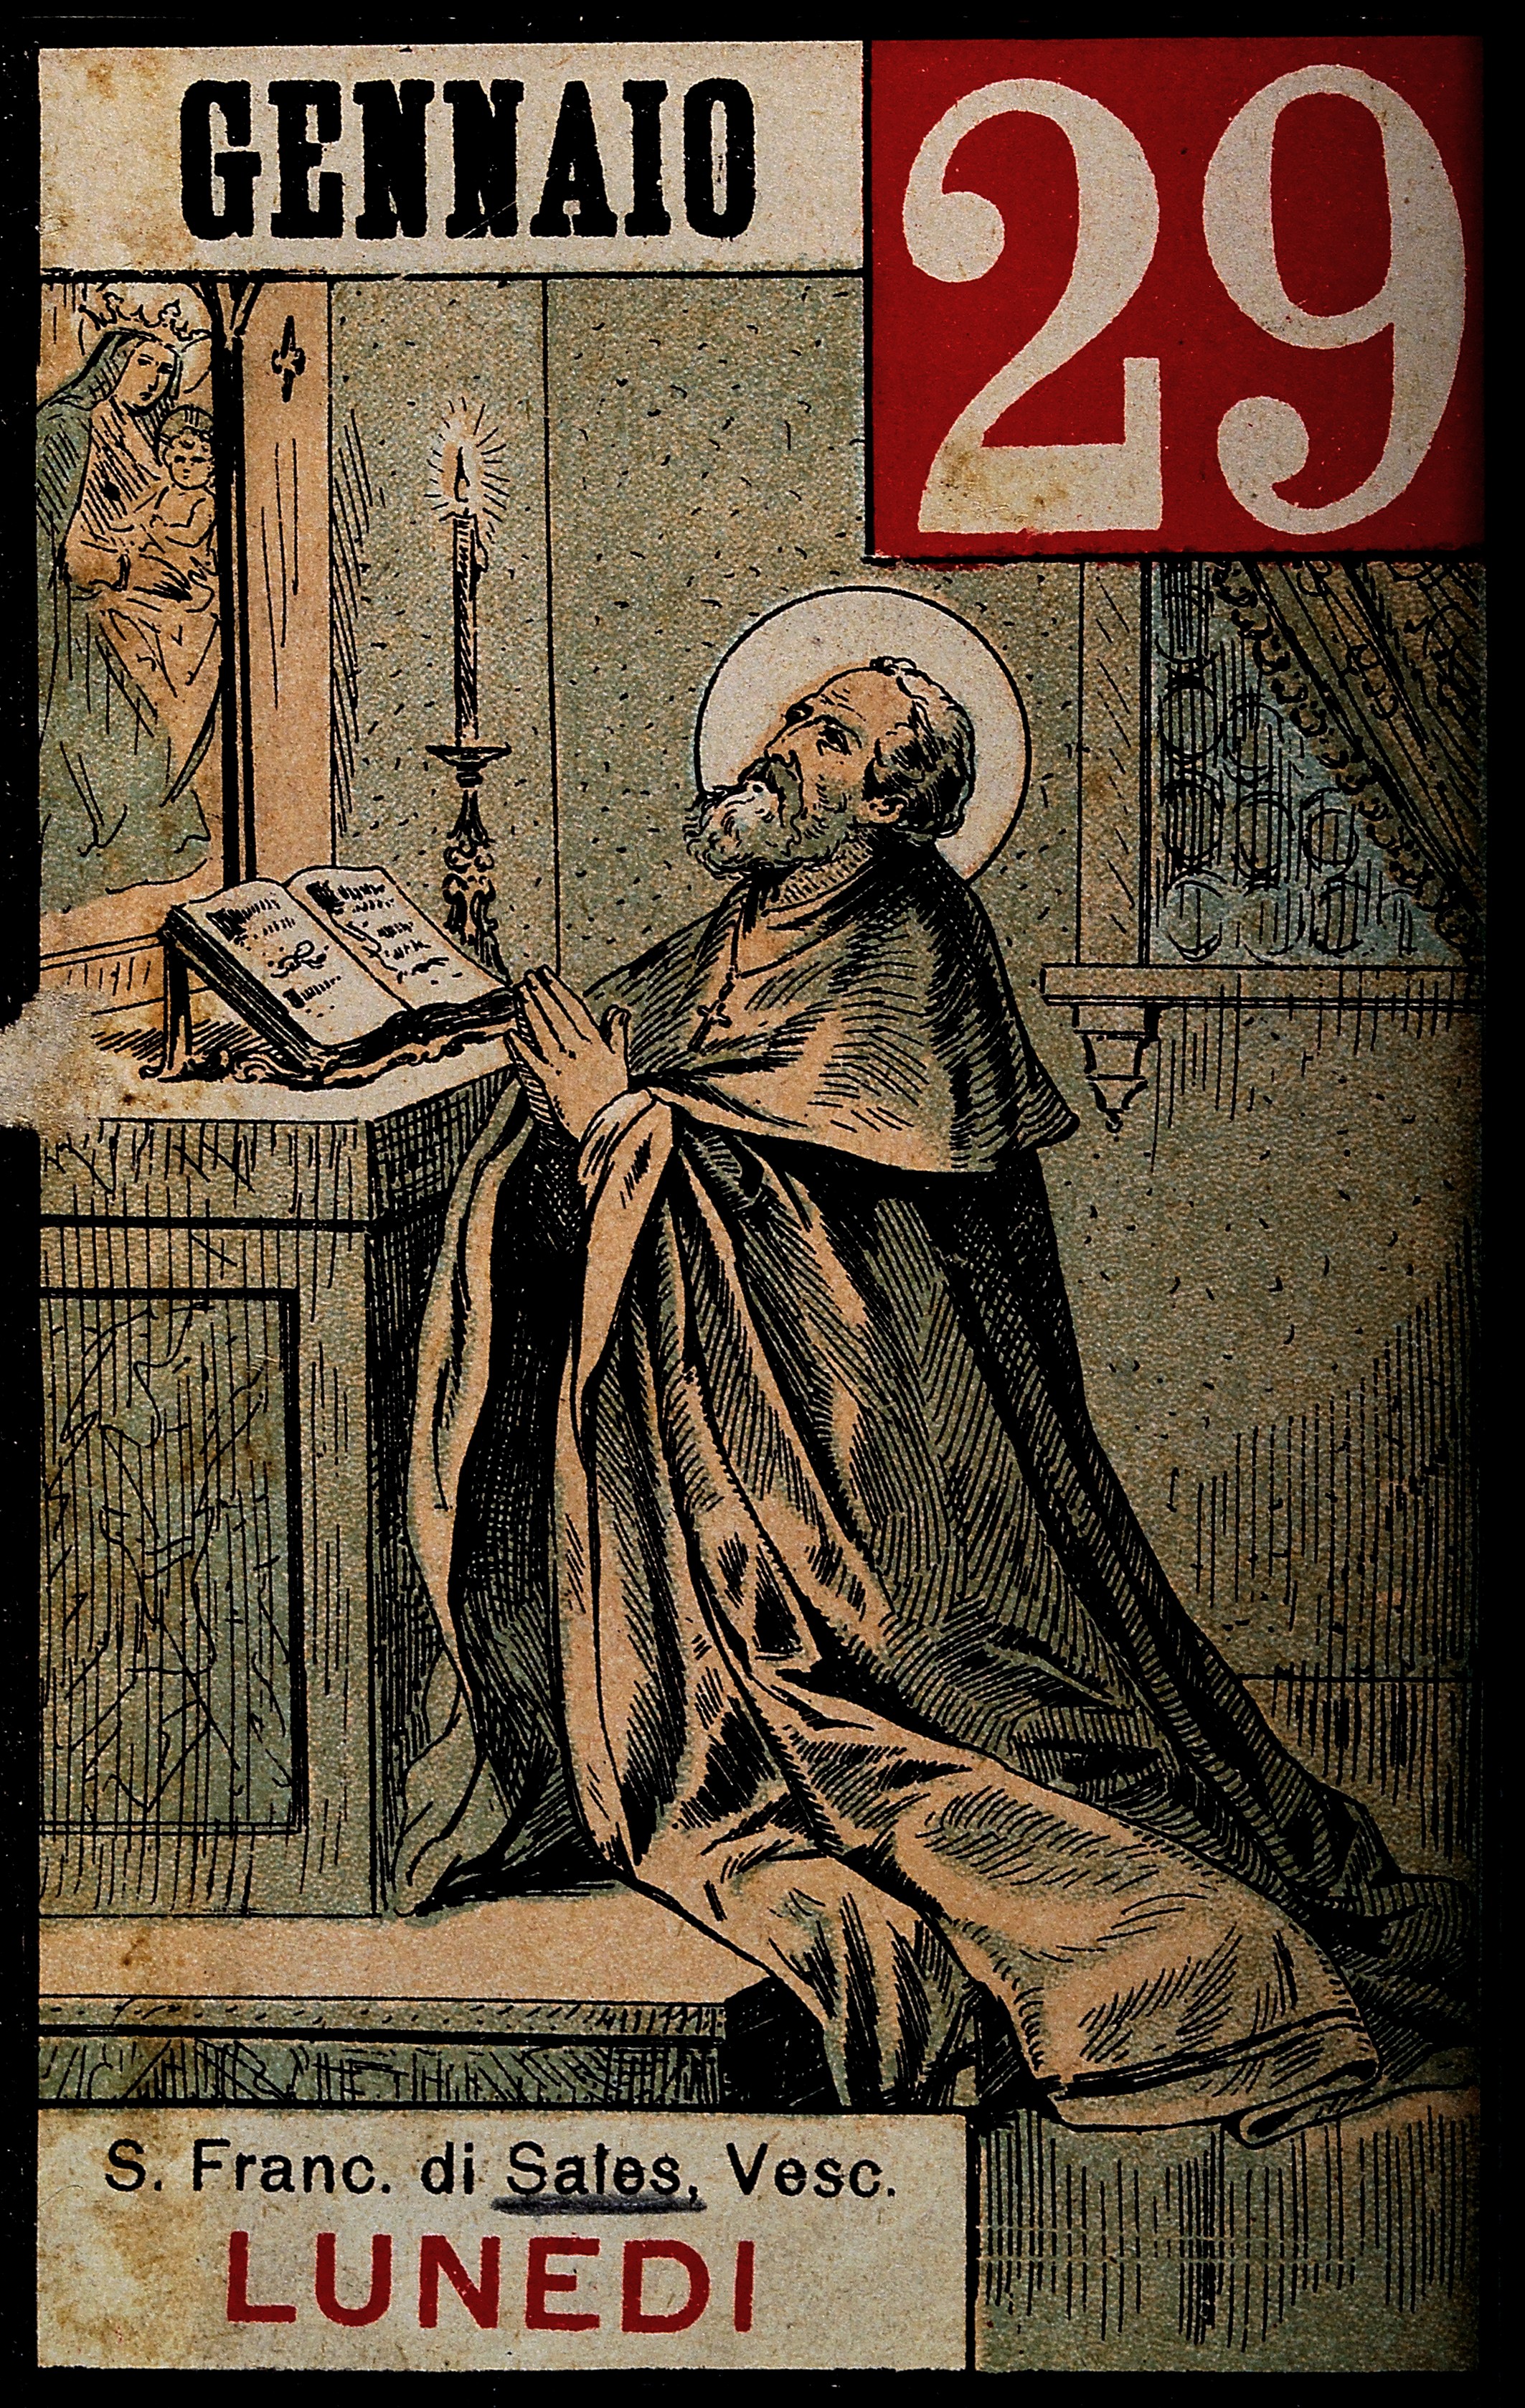 Saint Francis of Sales kneeling behind an altar, praying. Wellcome V0032004